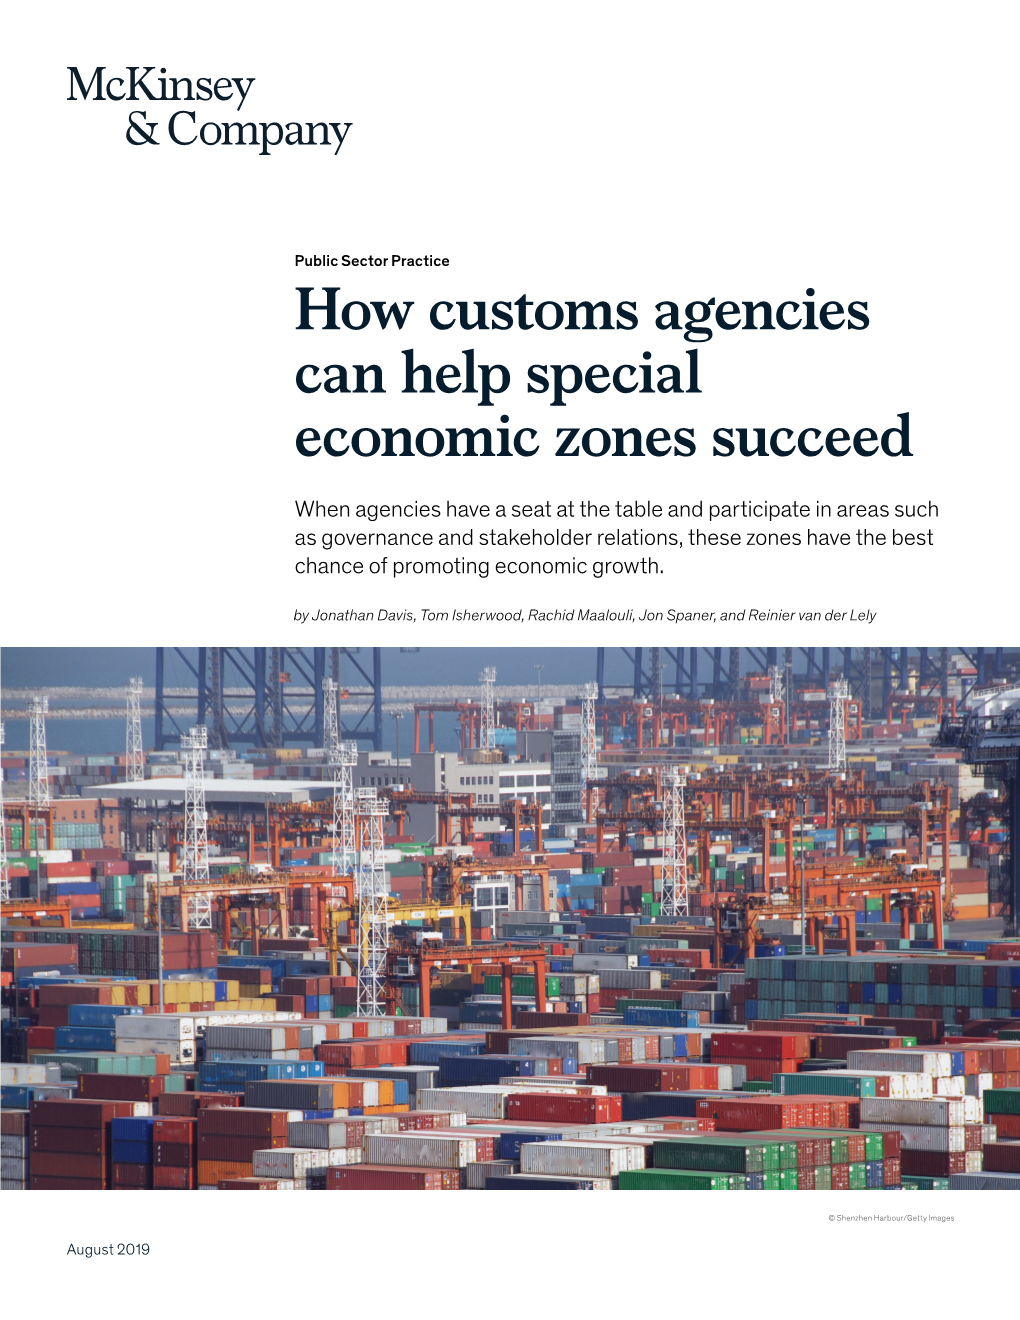 How Customs Agencies Can Help Special Economic Zones Succeed